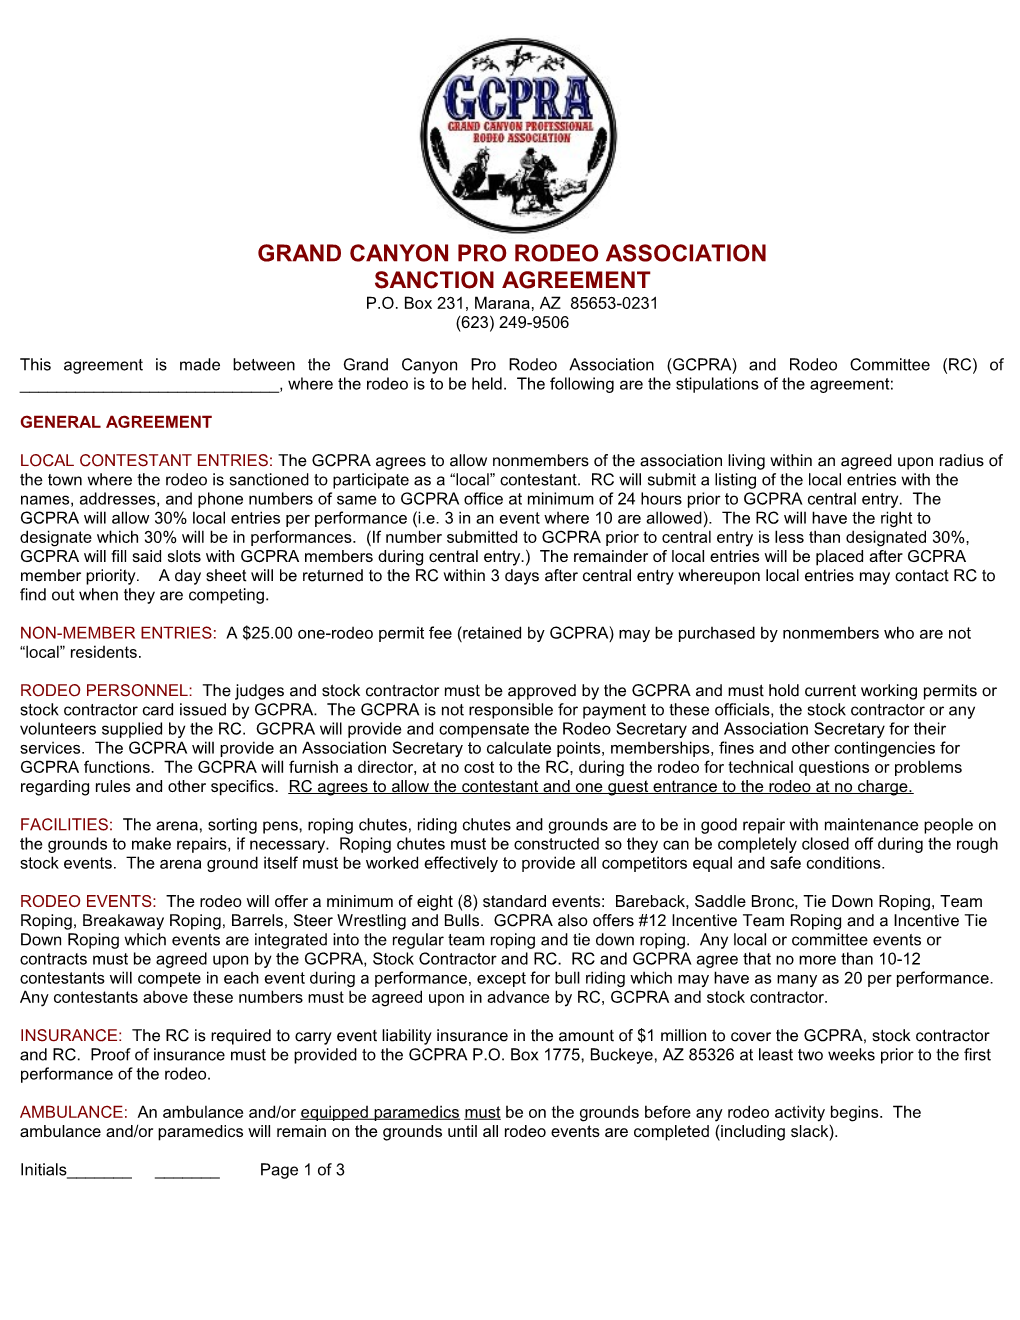 Grand Canyon Pro Rodeo Association